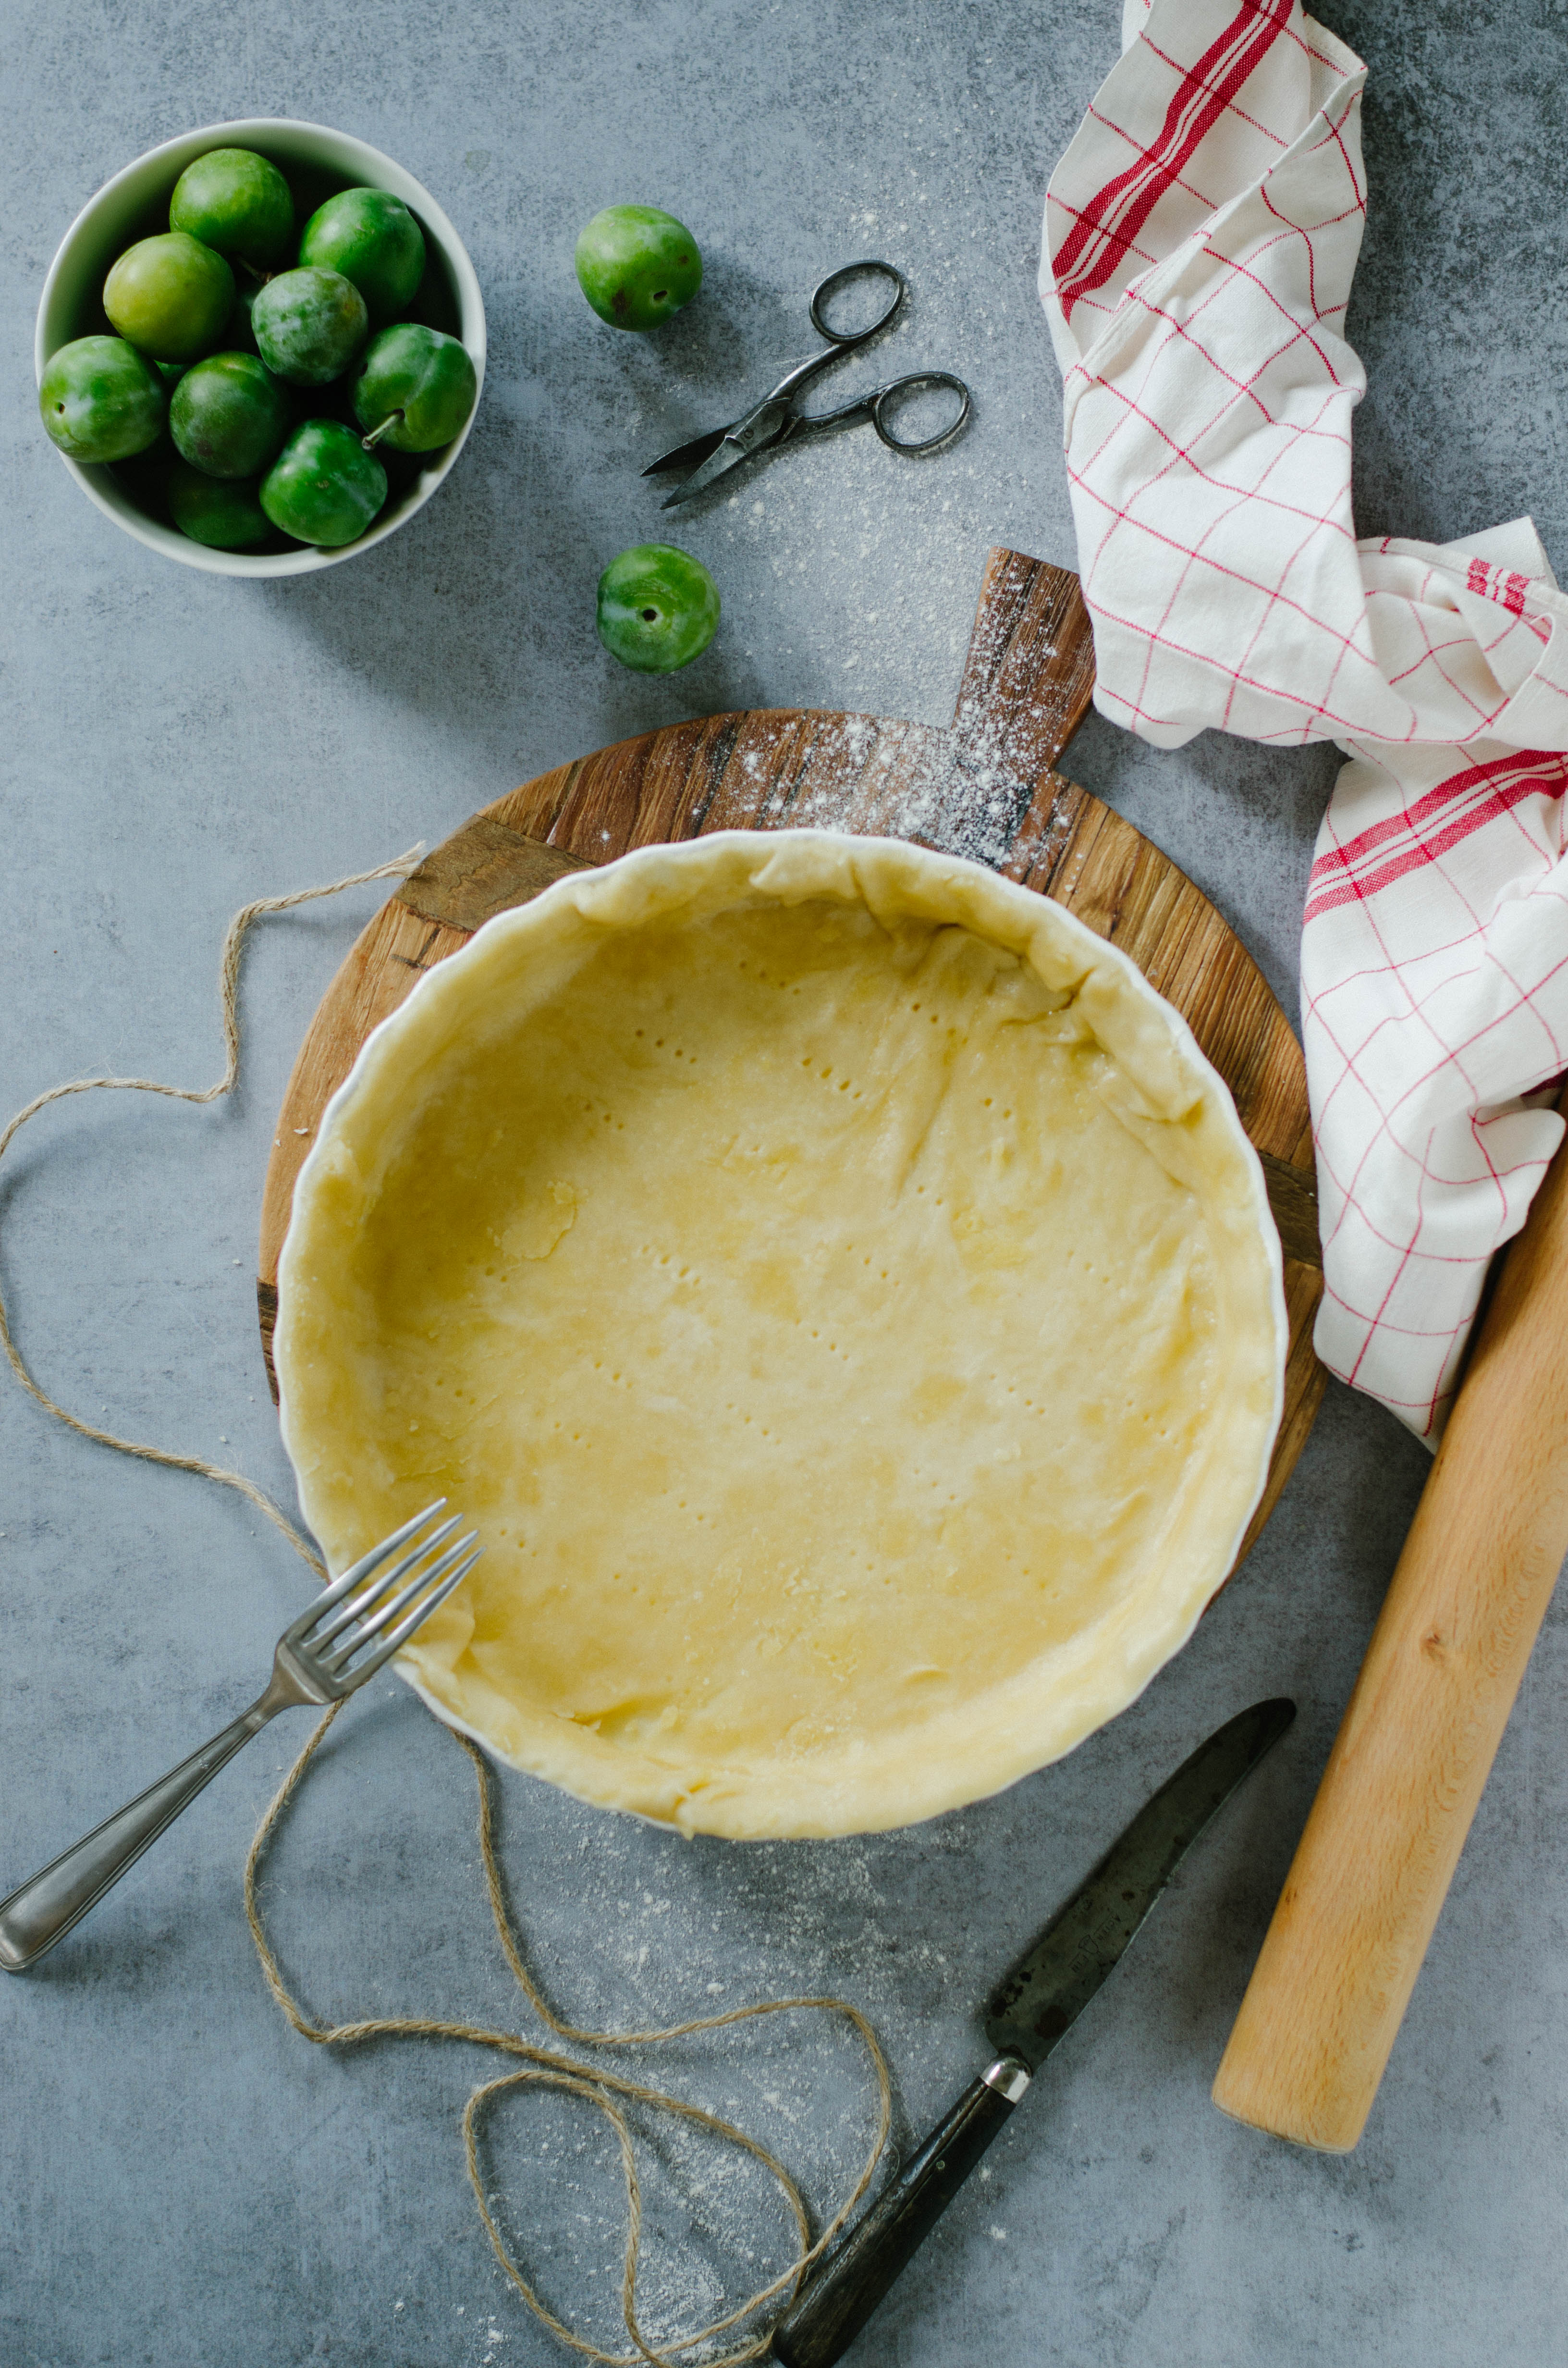 Pâte à tarte sans beurre